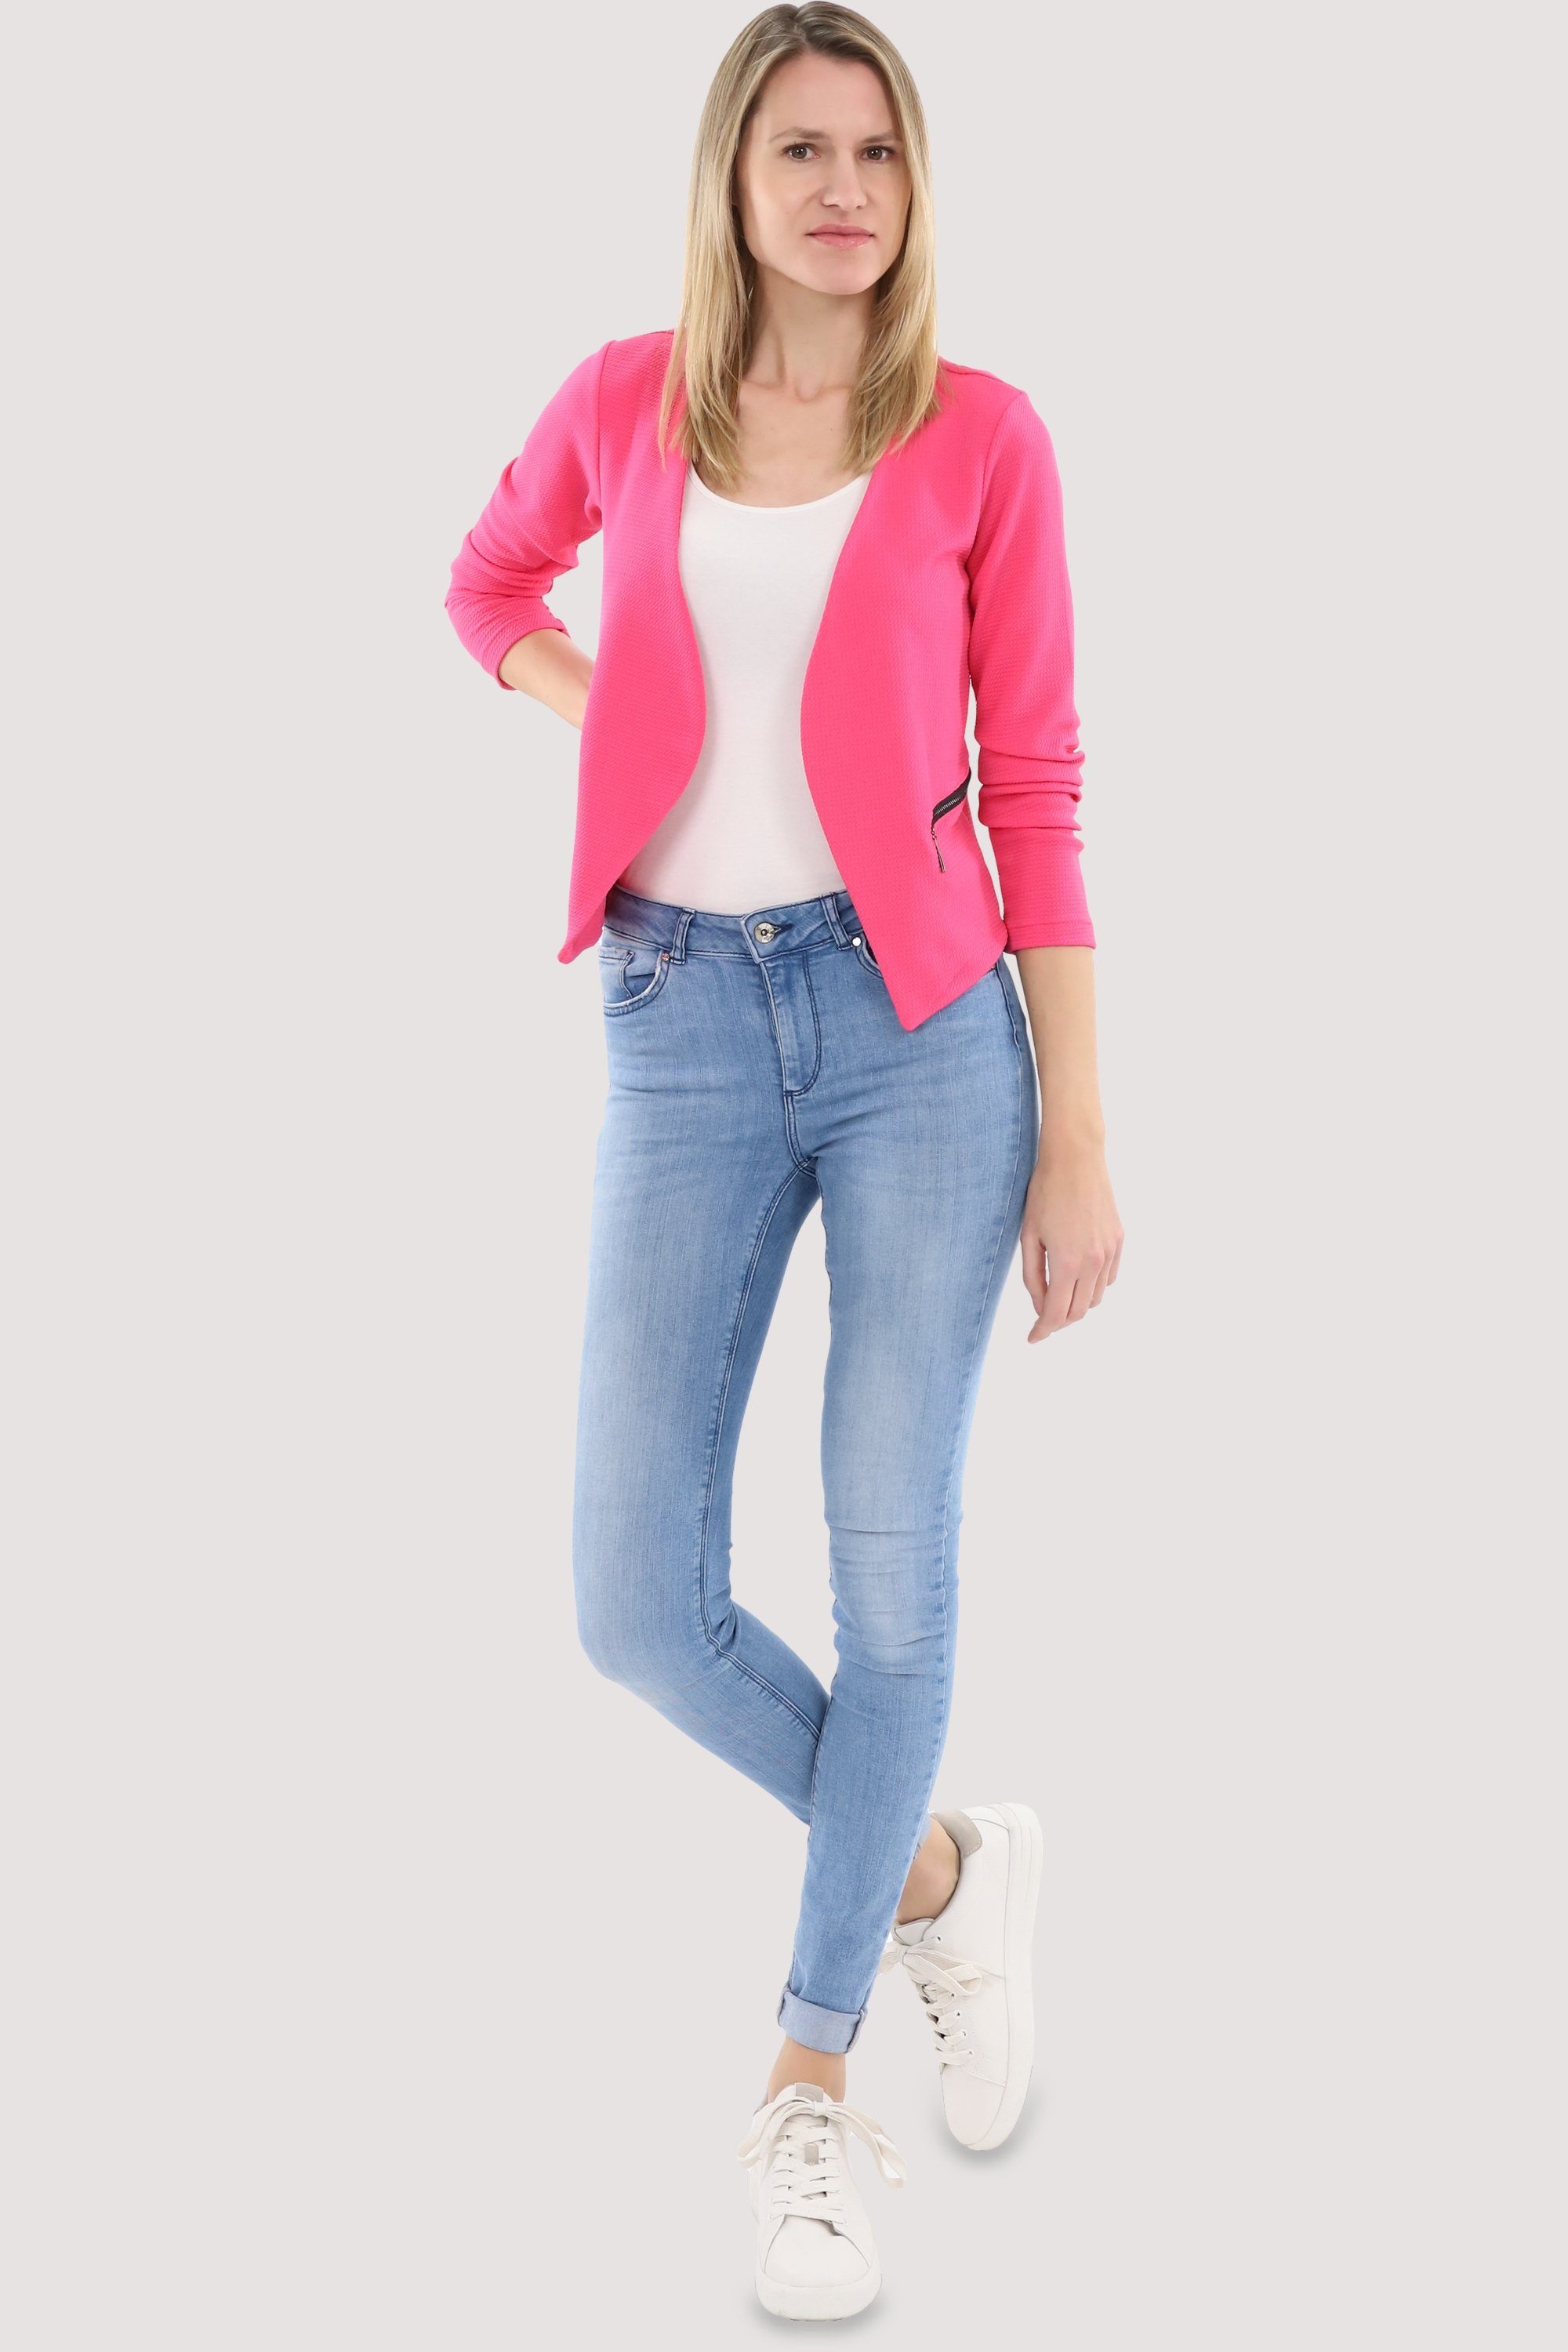 Jackenblazer fashion Sweatblazer Basic-Look pink 6040 more than im malito